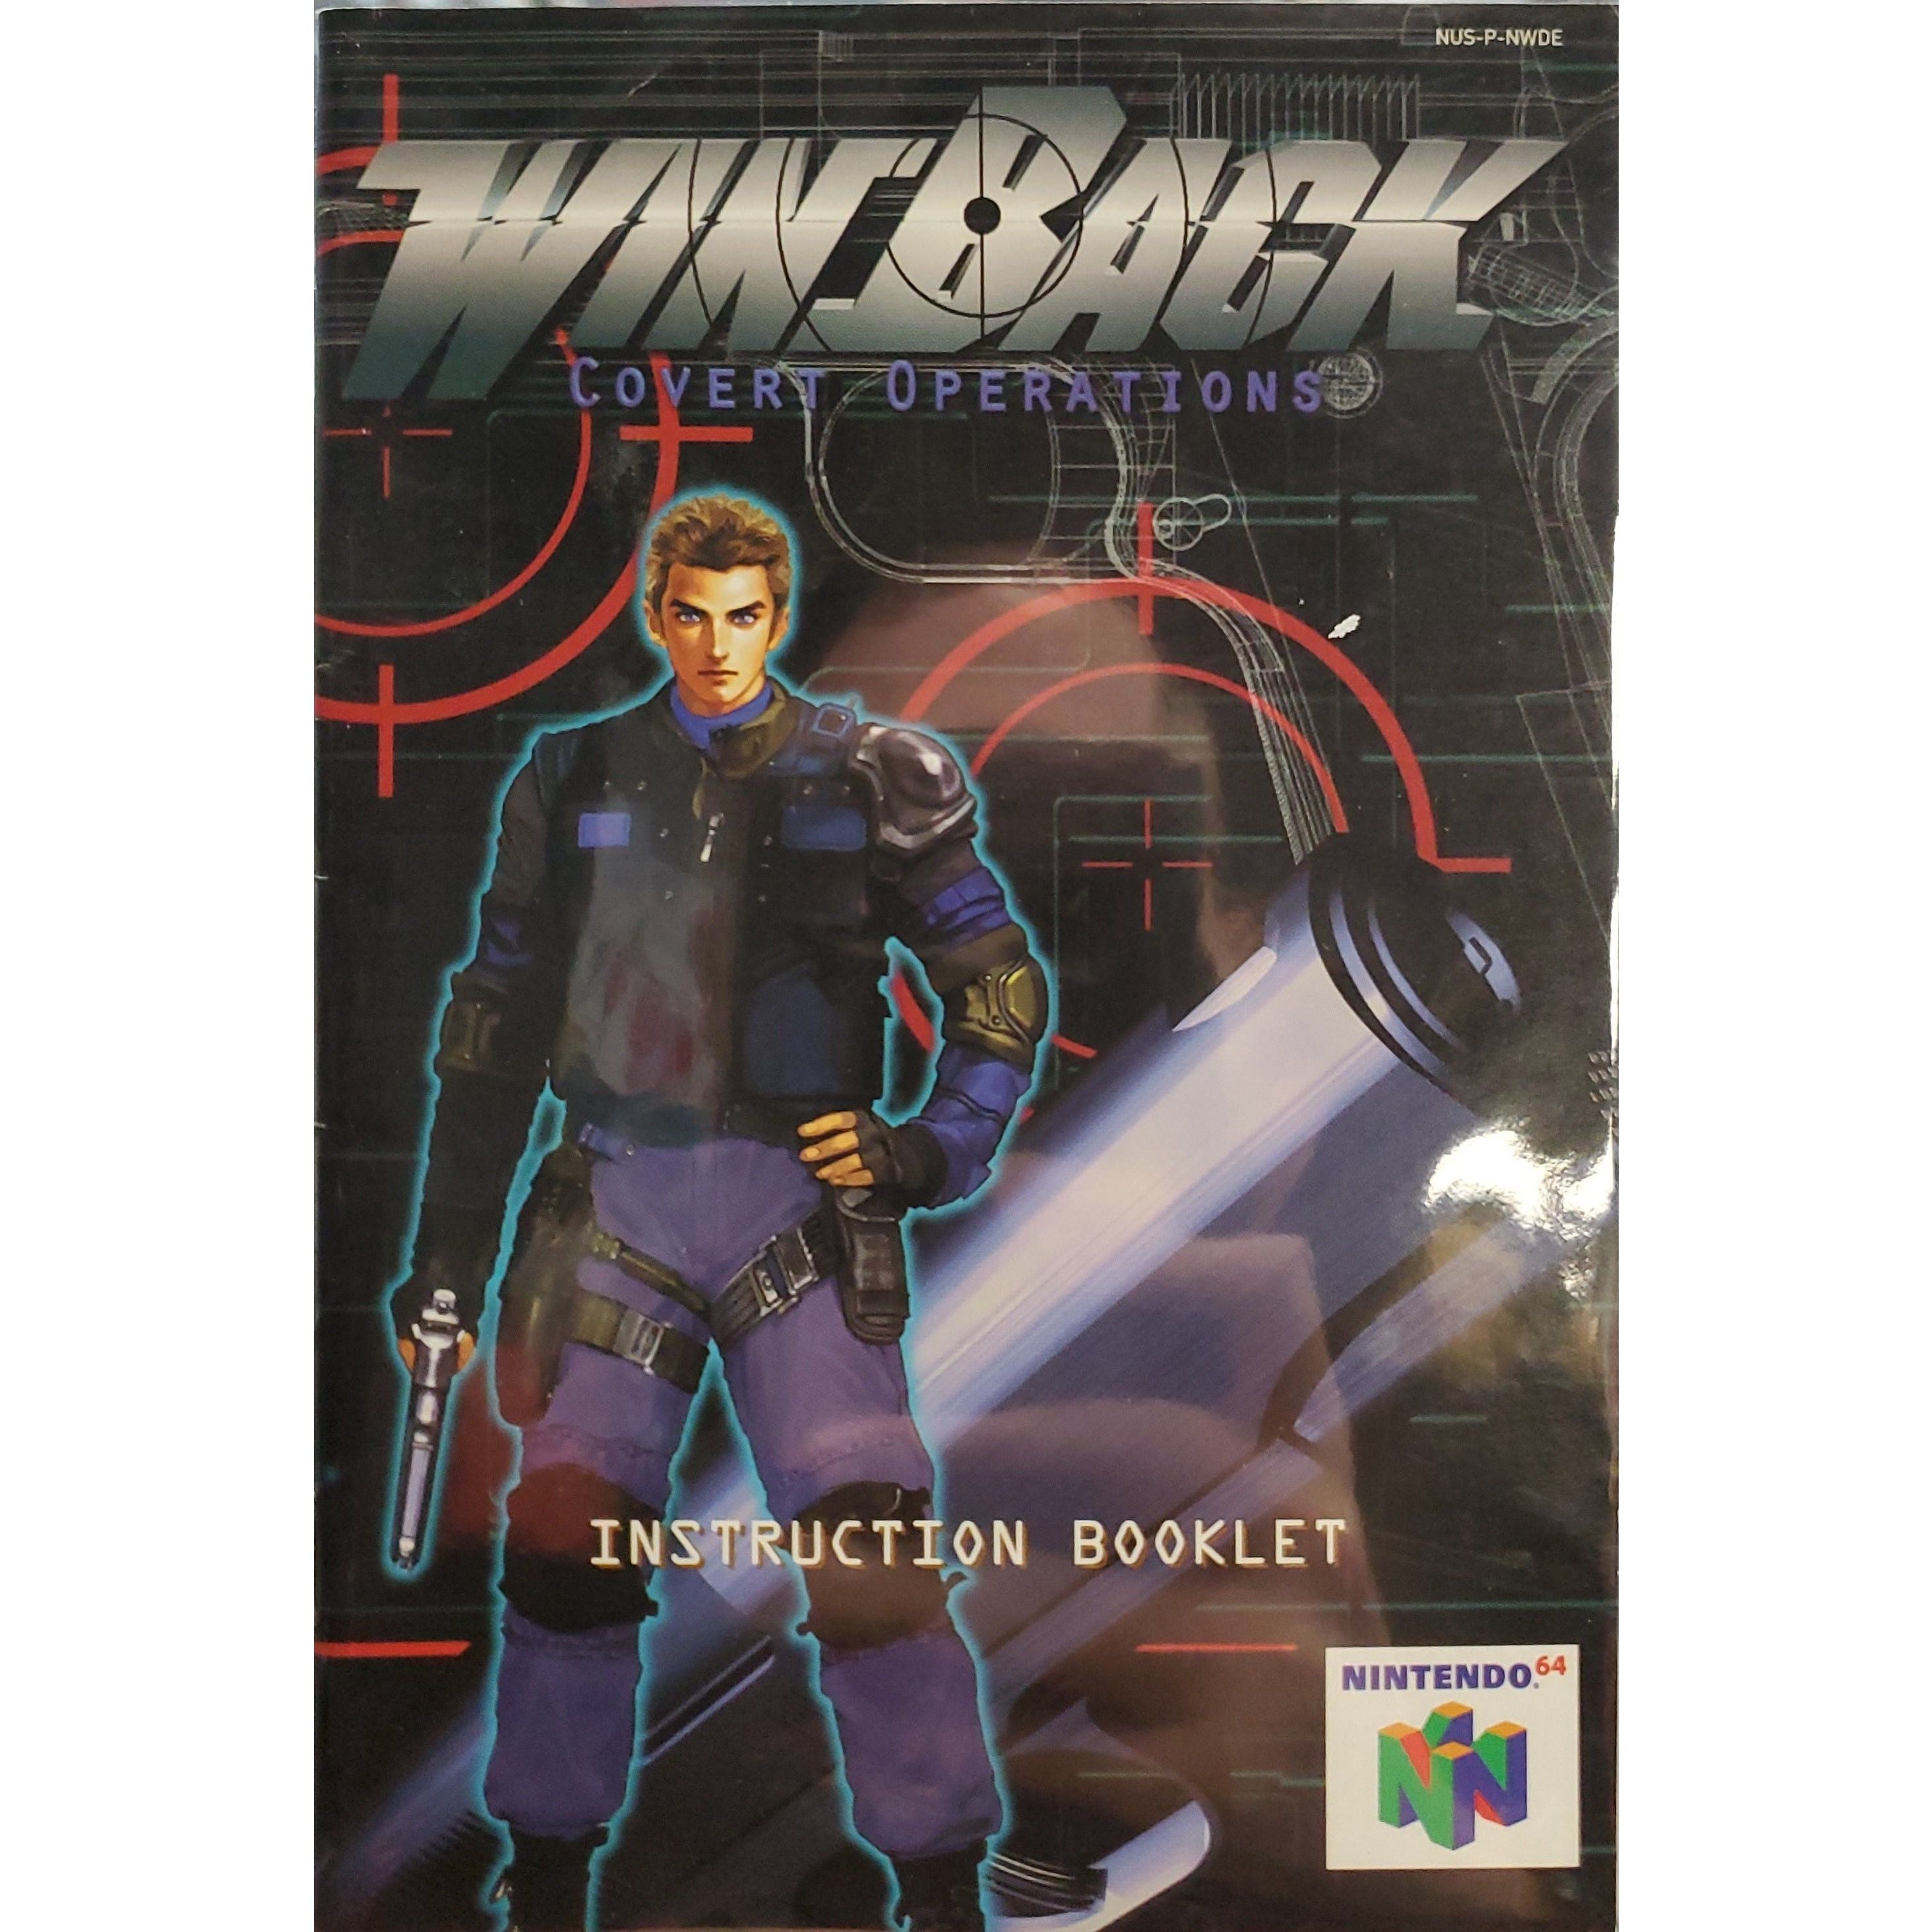 N64 - WinBack Covert Operations (Manual)